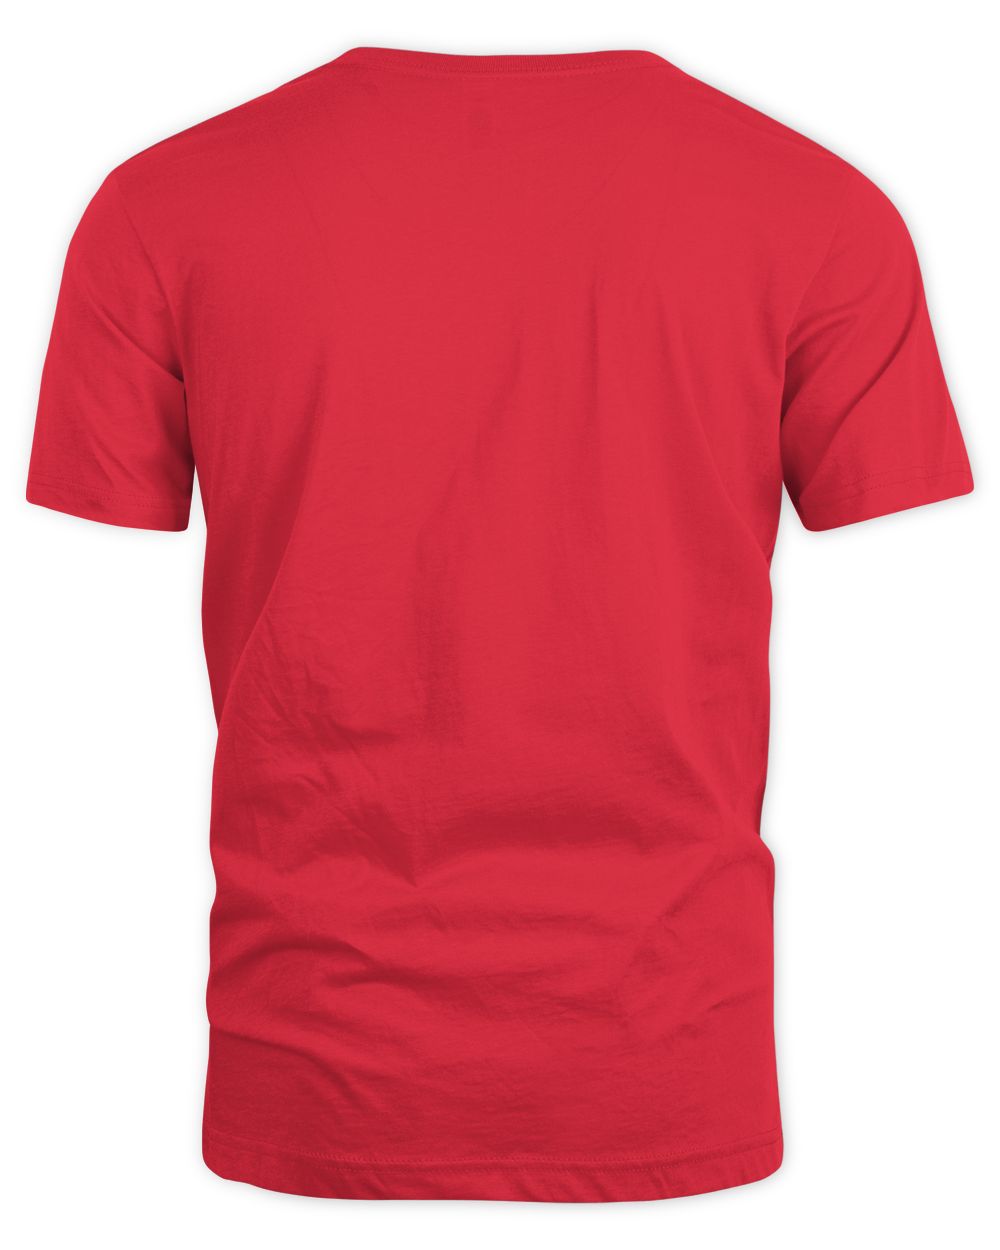 Red Vox Merch Visions Album Shirt Unisex Standard T-Shirt red 